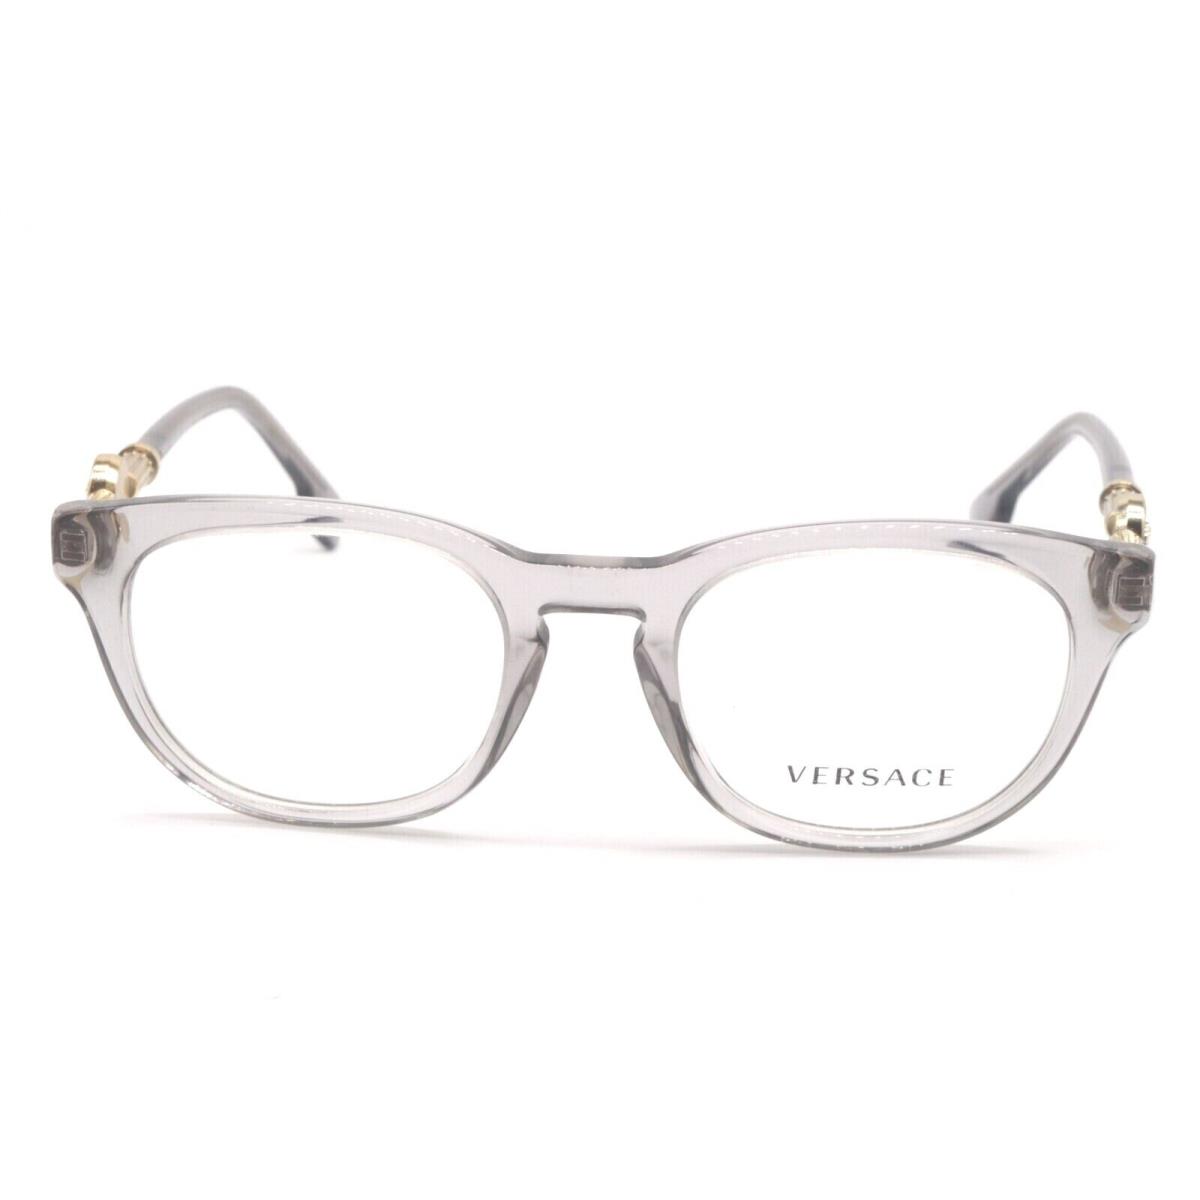 Versace eyeglasses  - CLEAR GOLD Frame